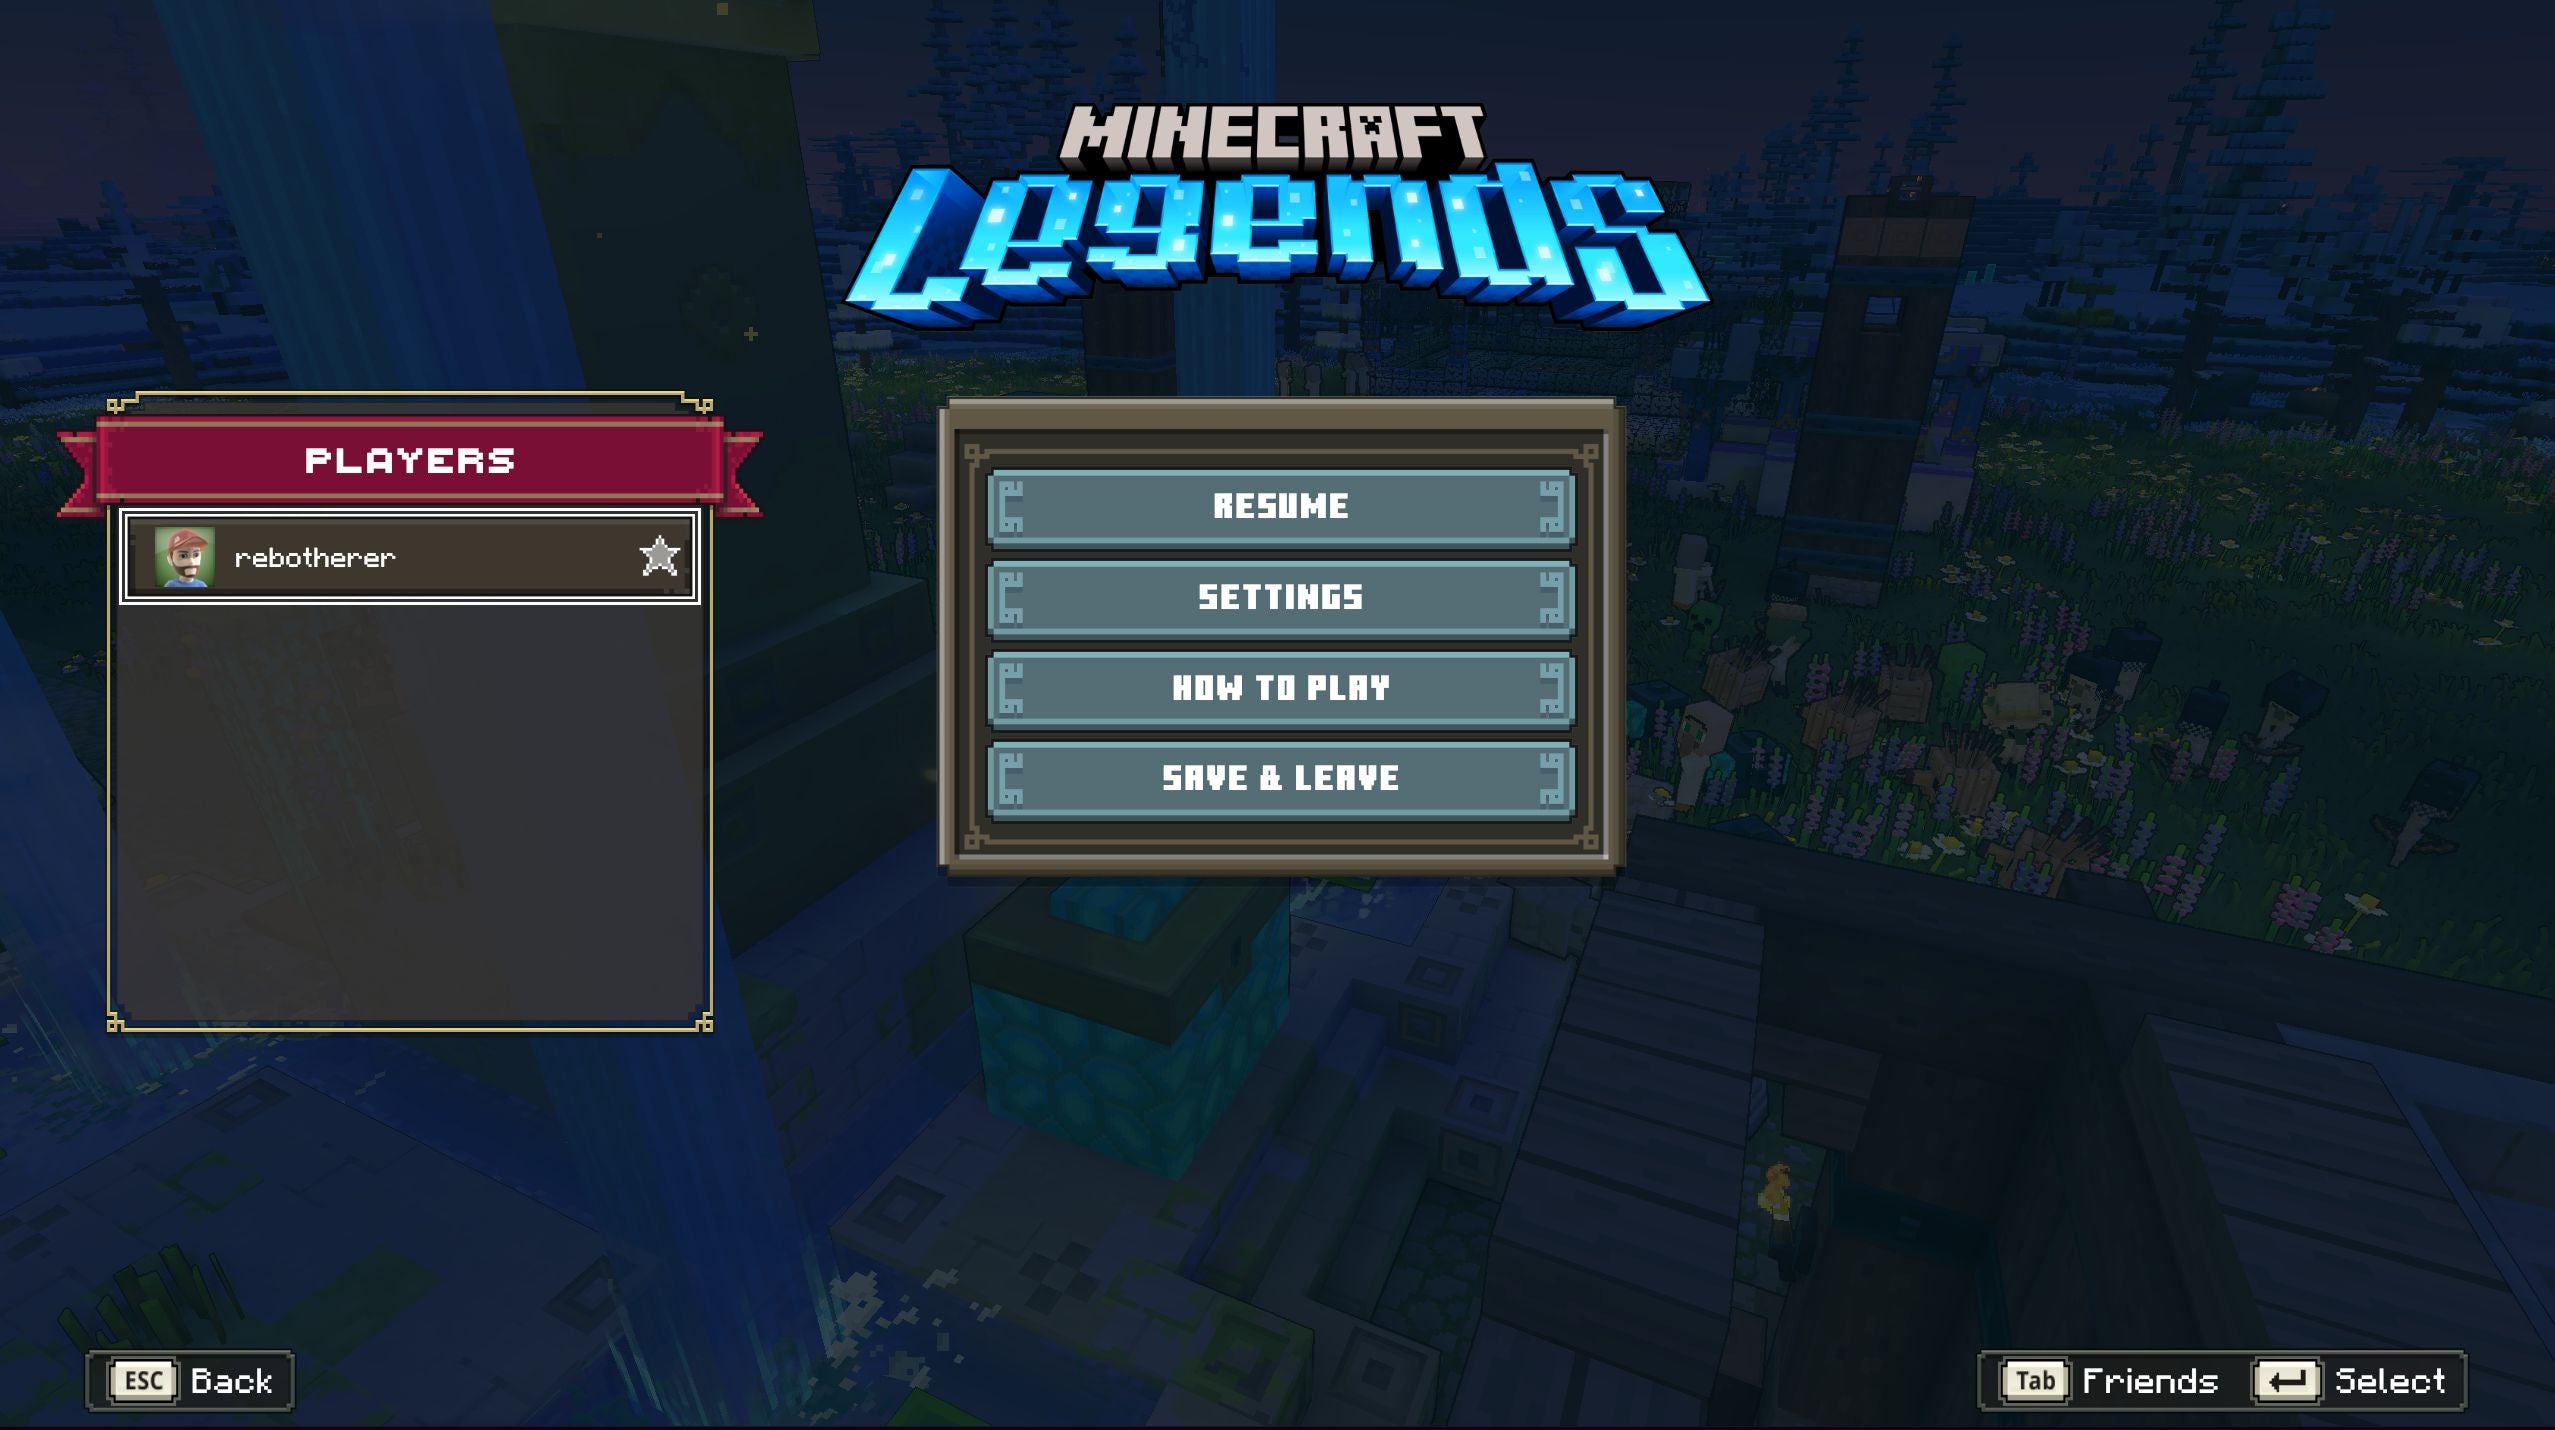 Minecraft Legends Steam Deck Settings - Performance